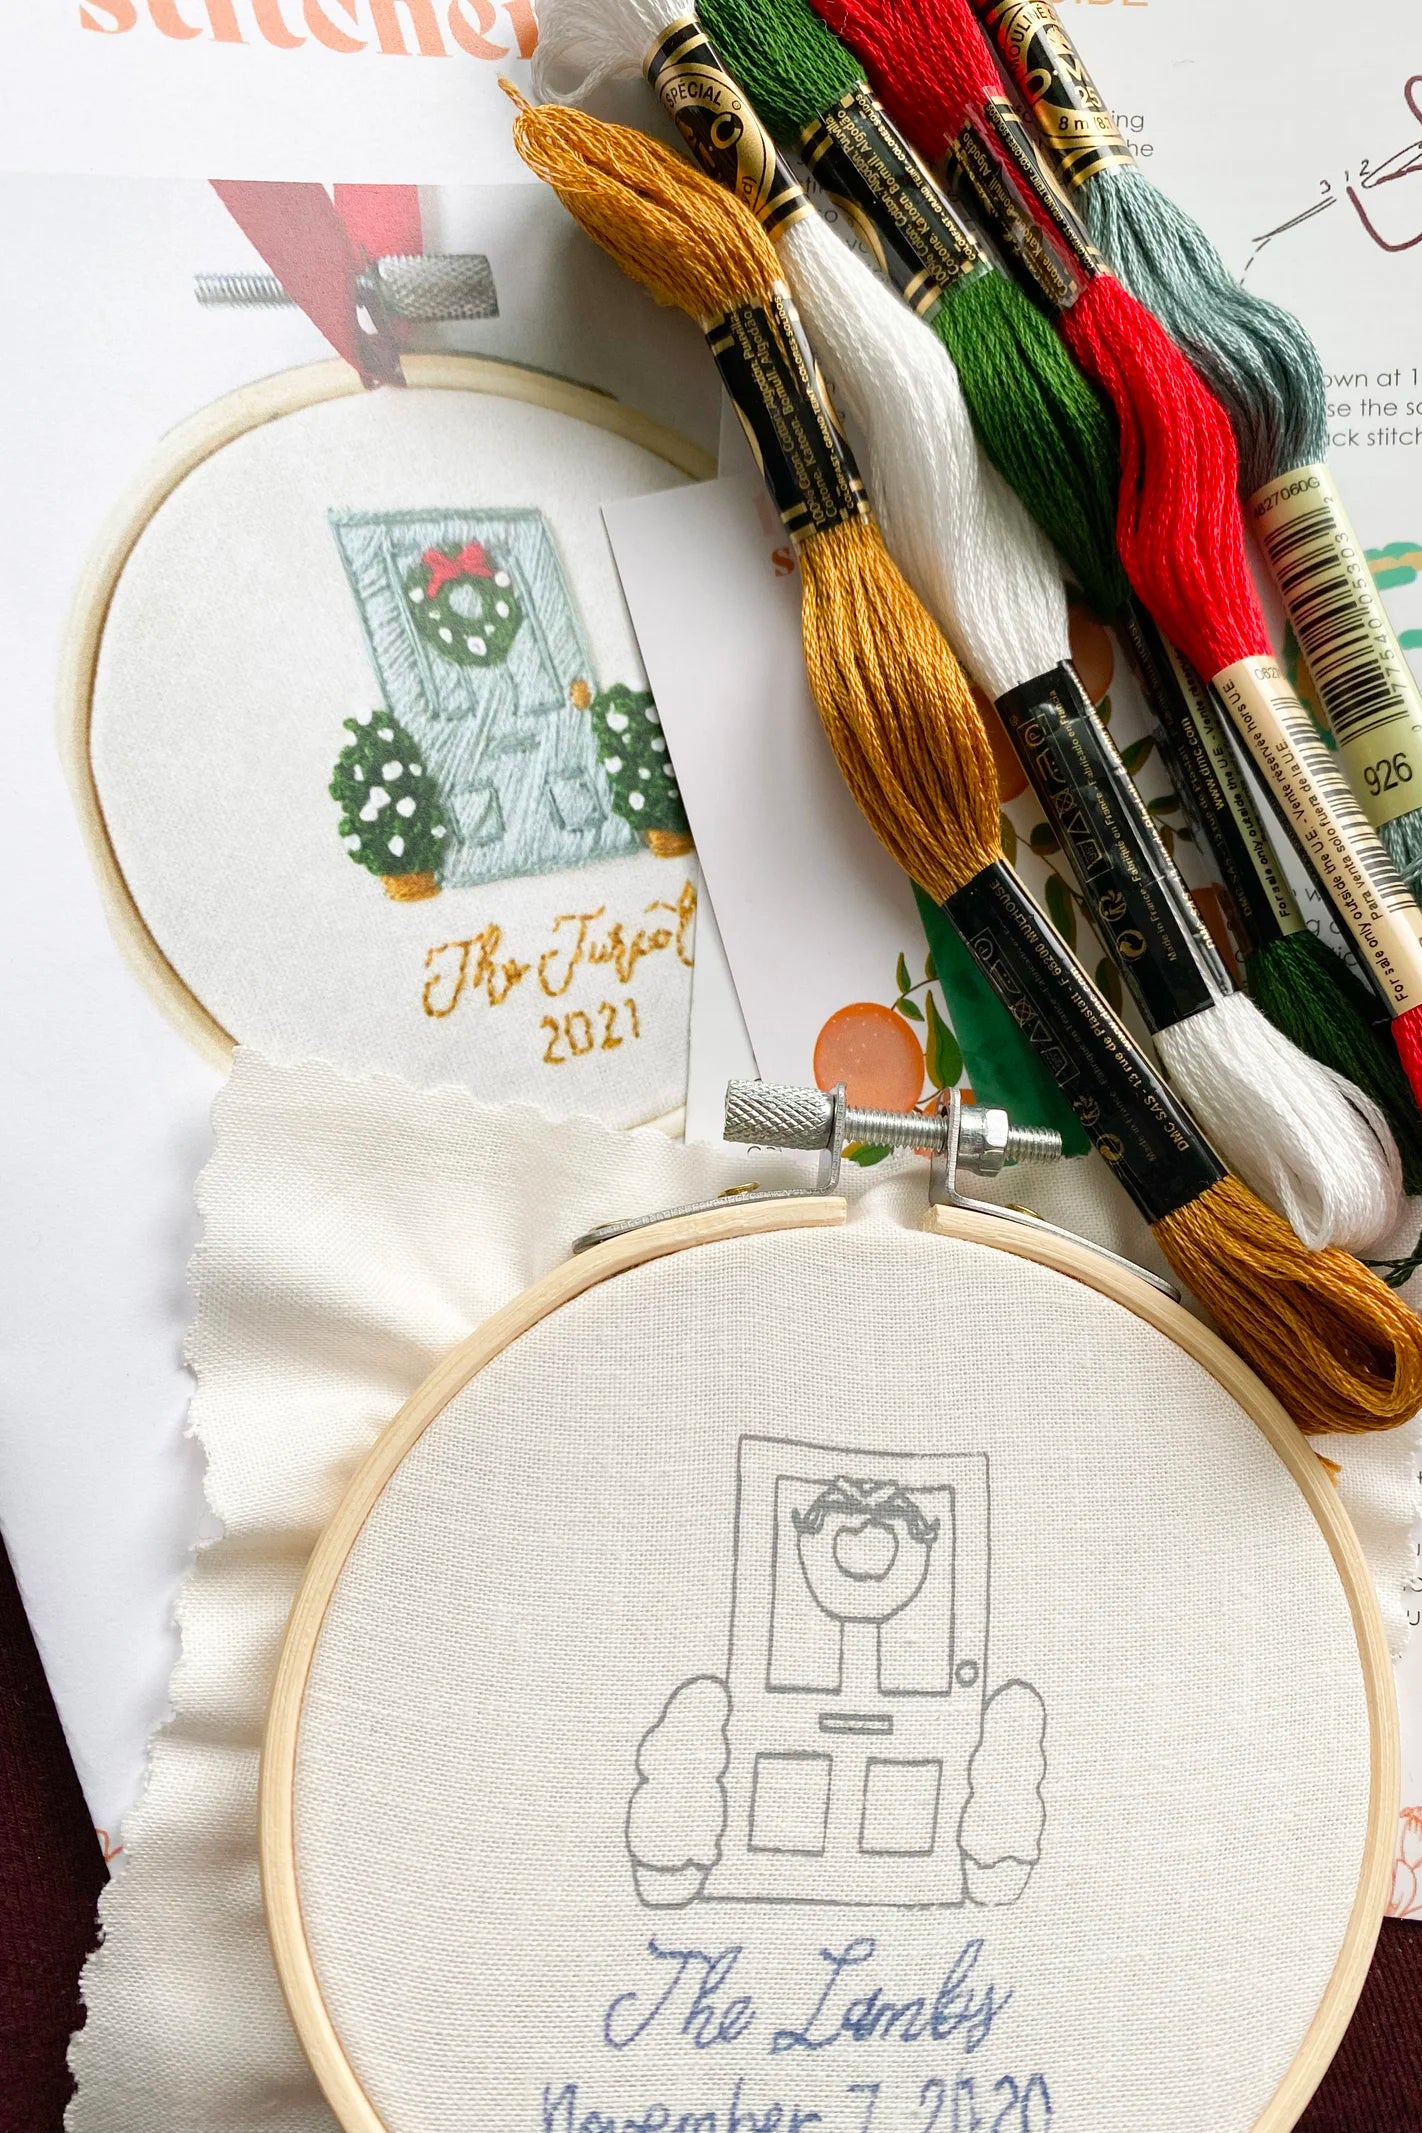 Christmas Door Embroidery Kit